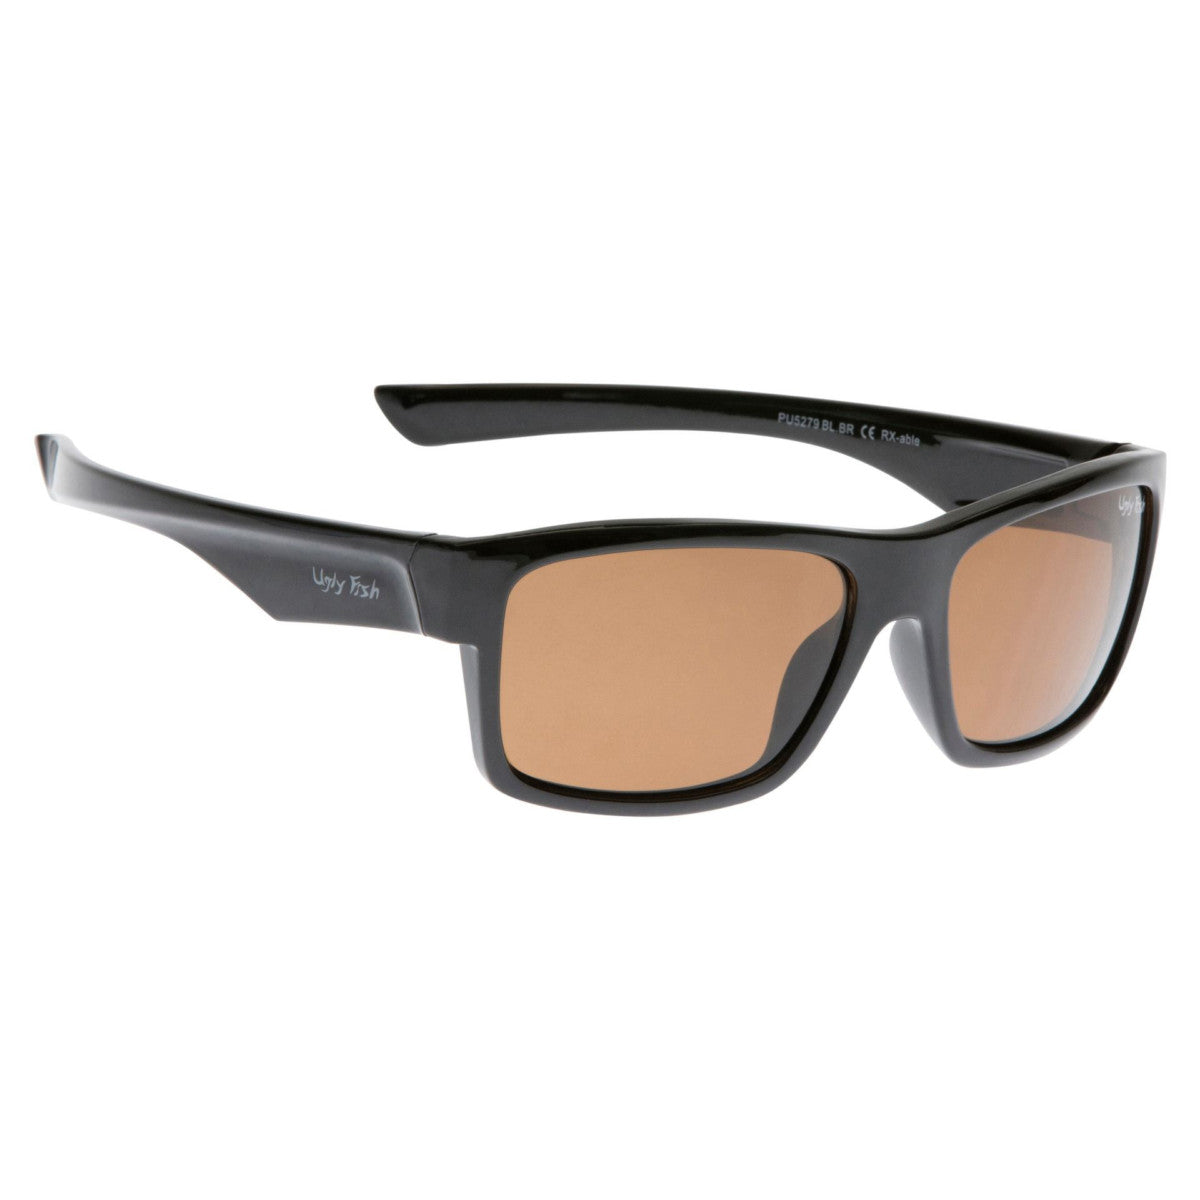 Ugly Fish PU5279 Unbreakable Polarised Sunglasses-Sunglasses-Ugly Fish-Black - Brown (MBL.BR)-Fishing Station